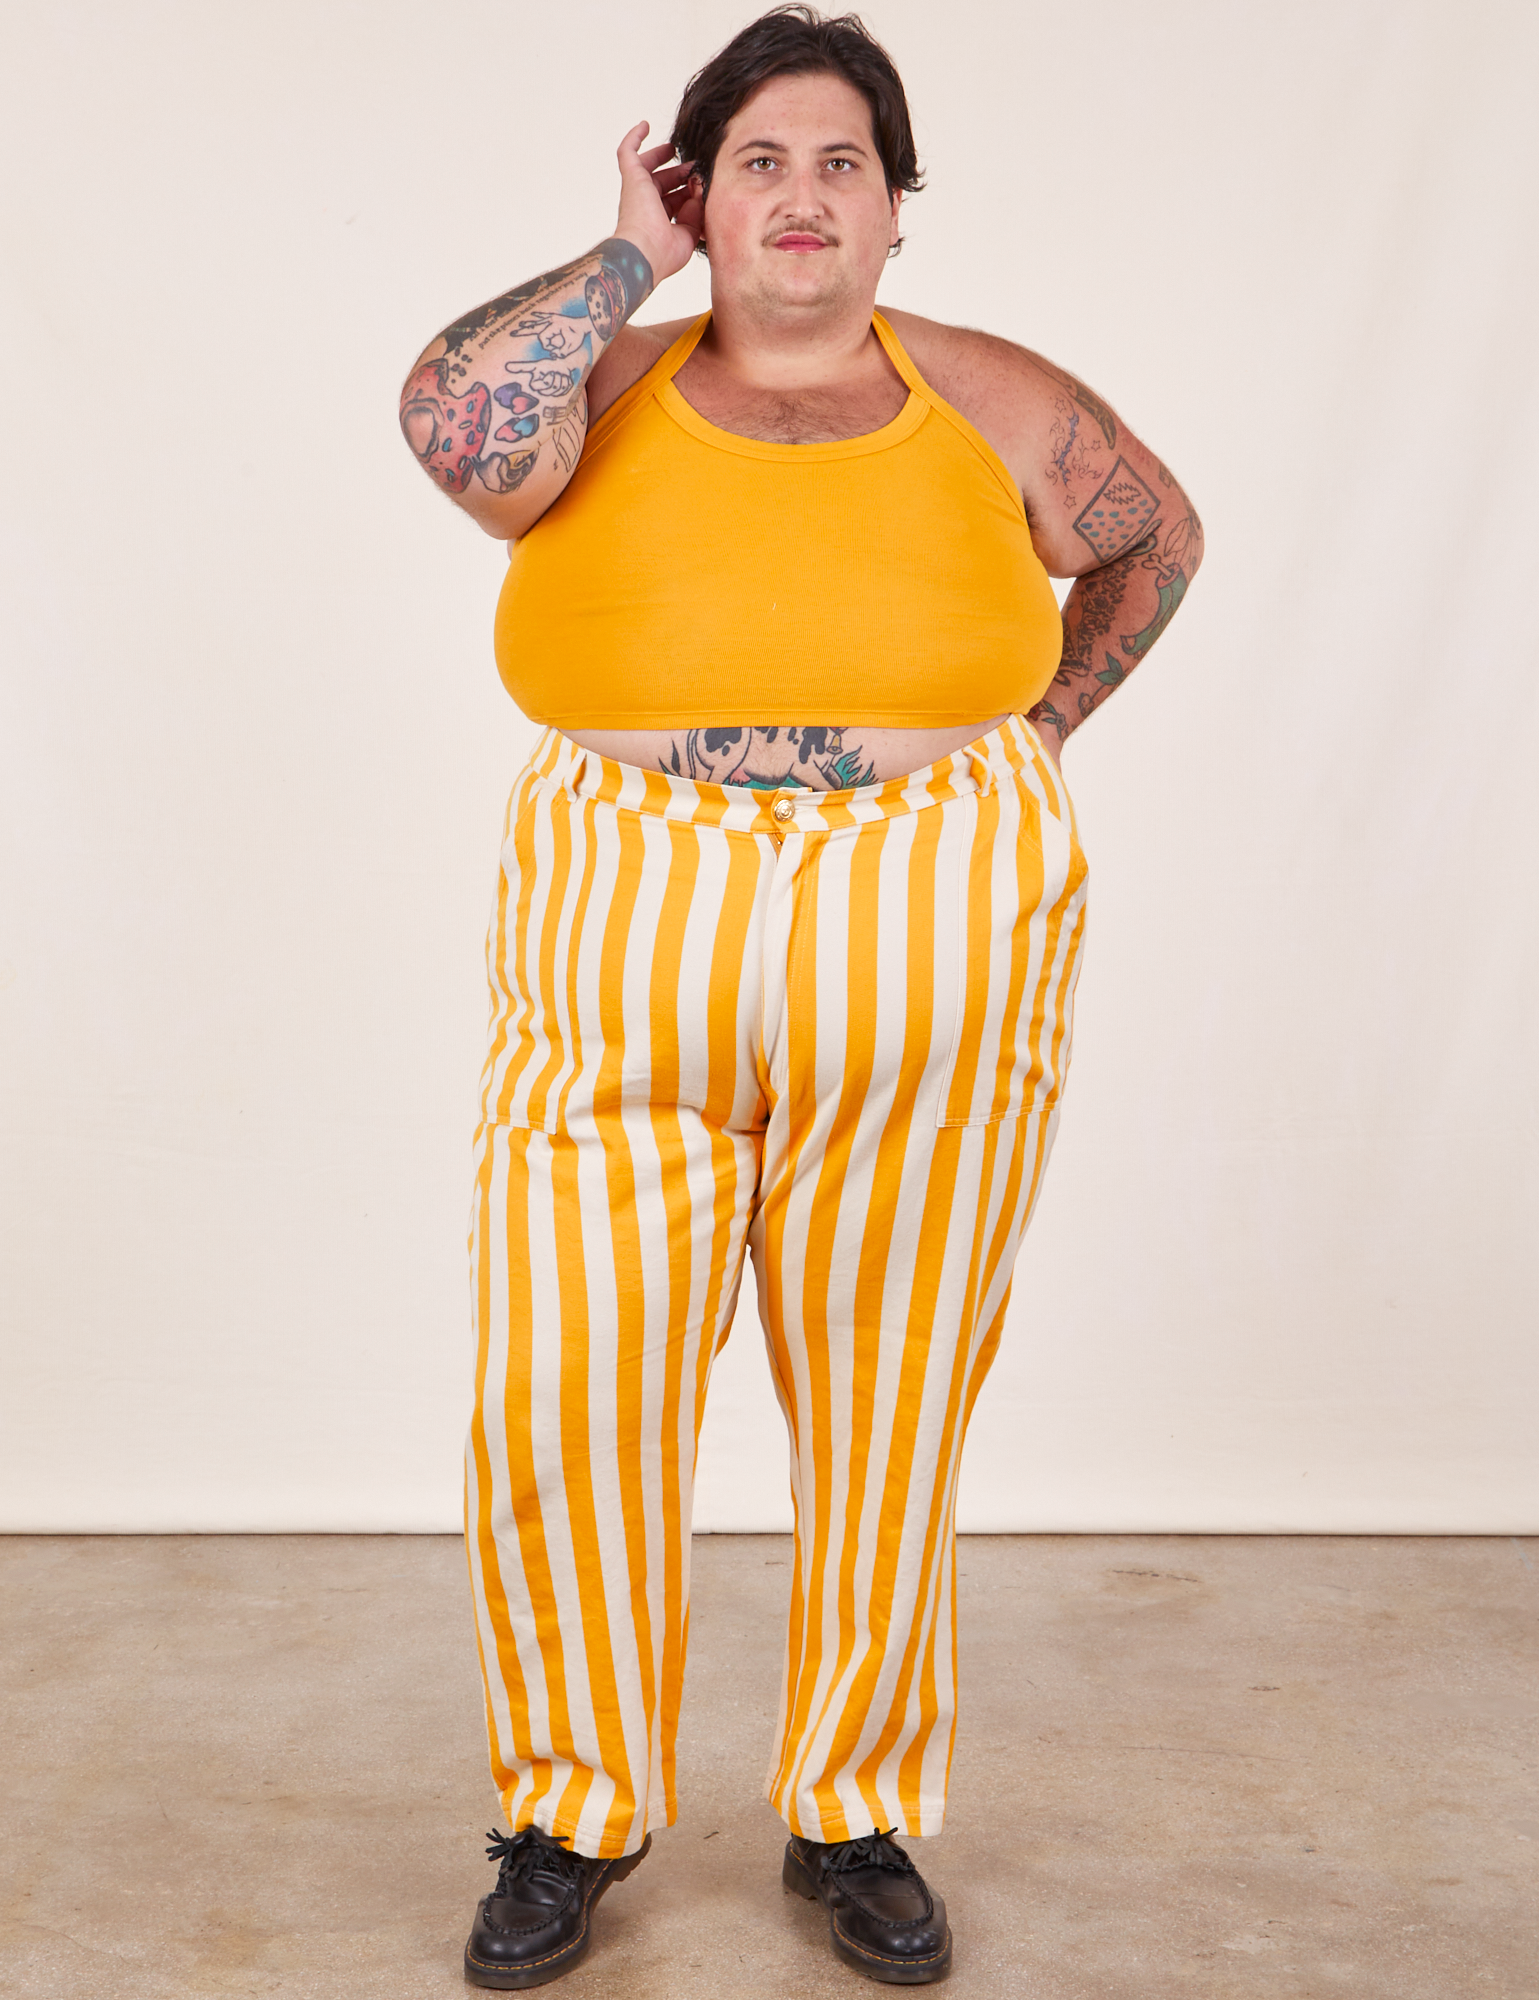 Sam is wearing Work Pants in Lemon Stripe and mustard yellow Halter Top